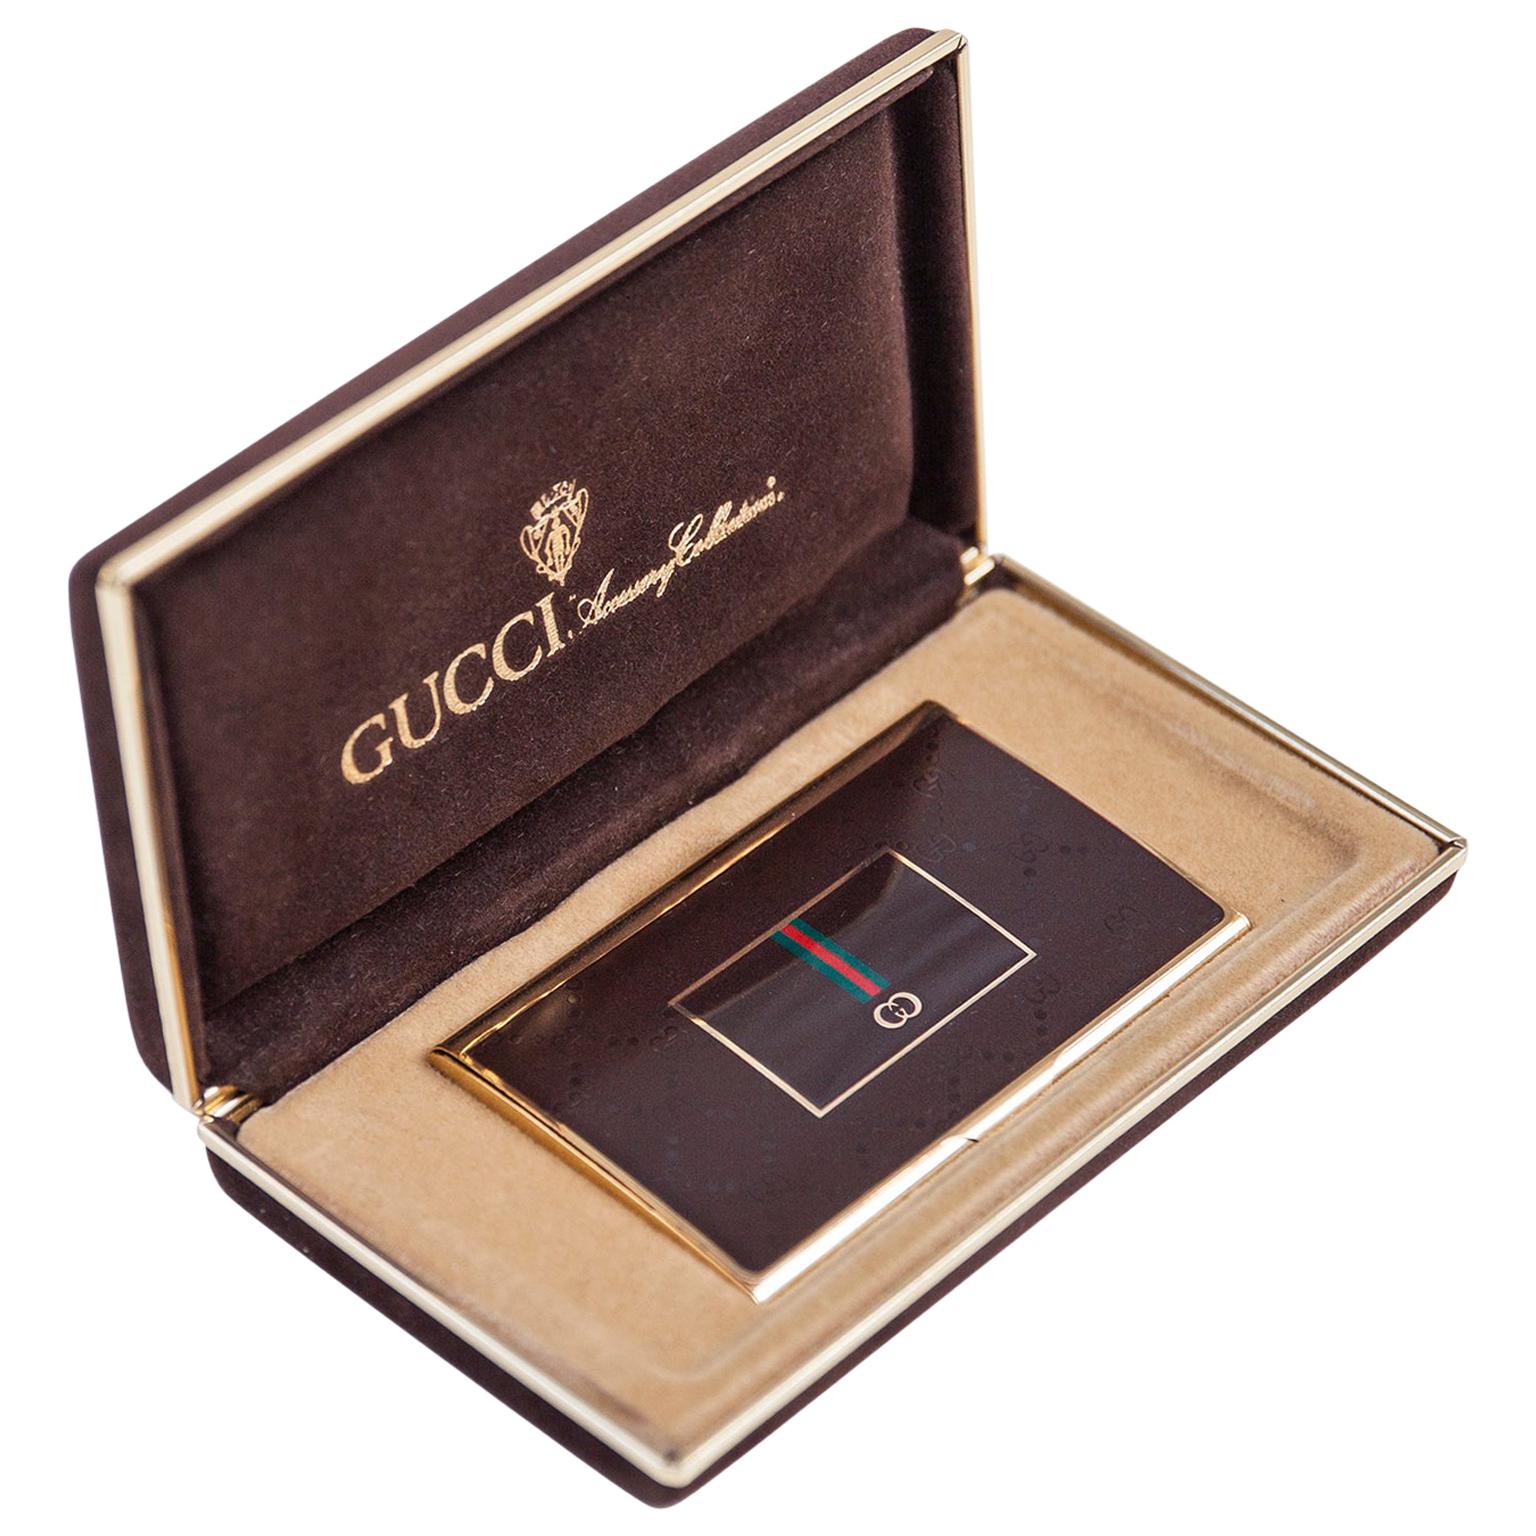 Gucci key holder and card holder. - Bukowskis